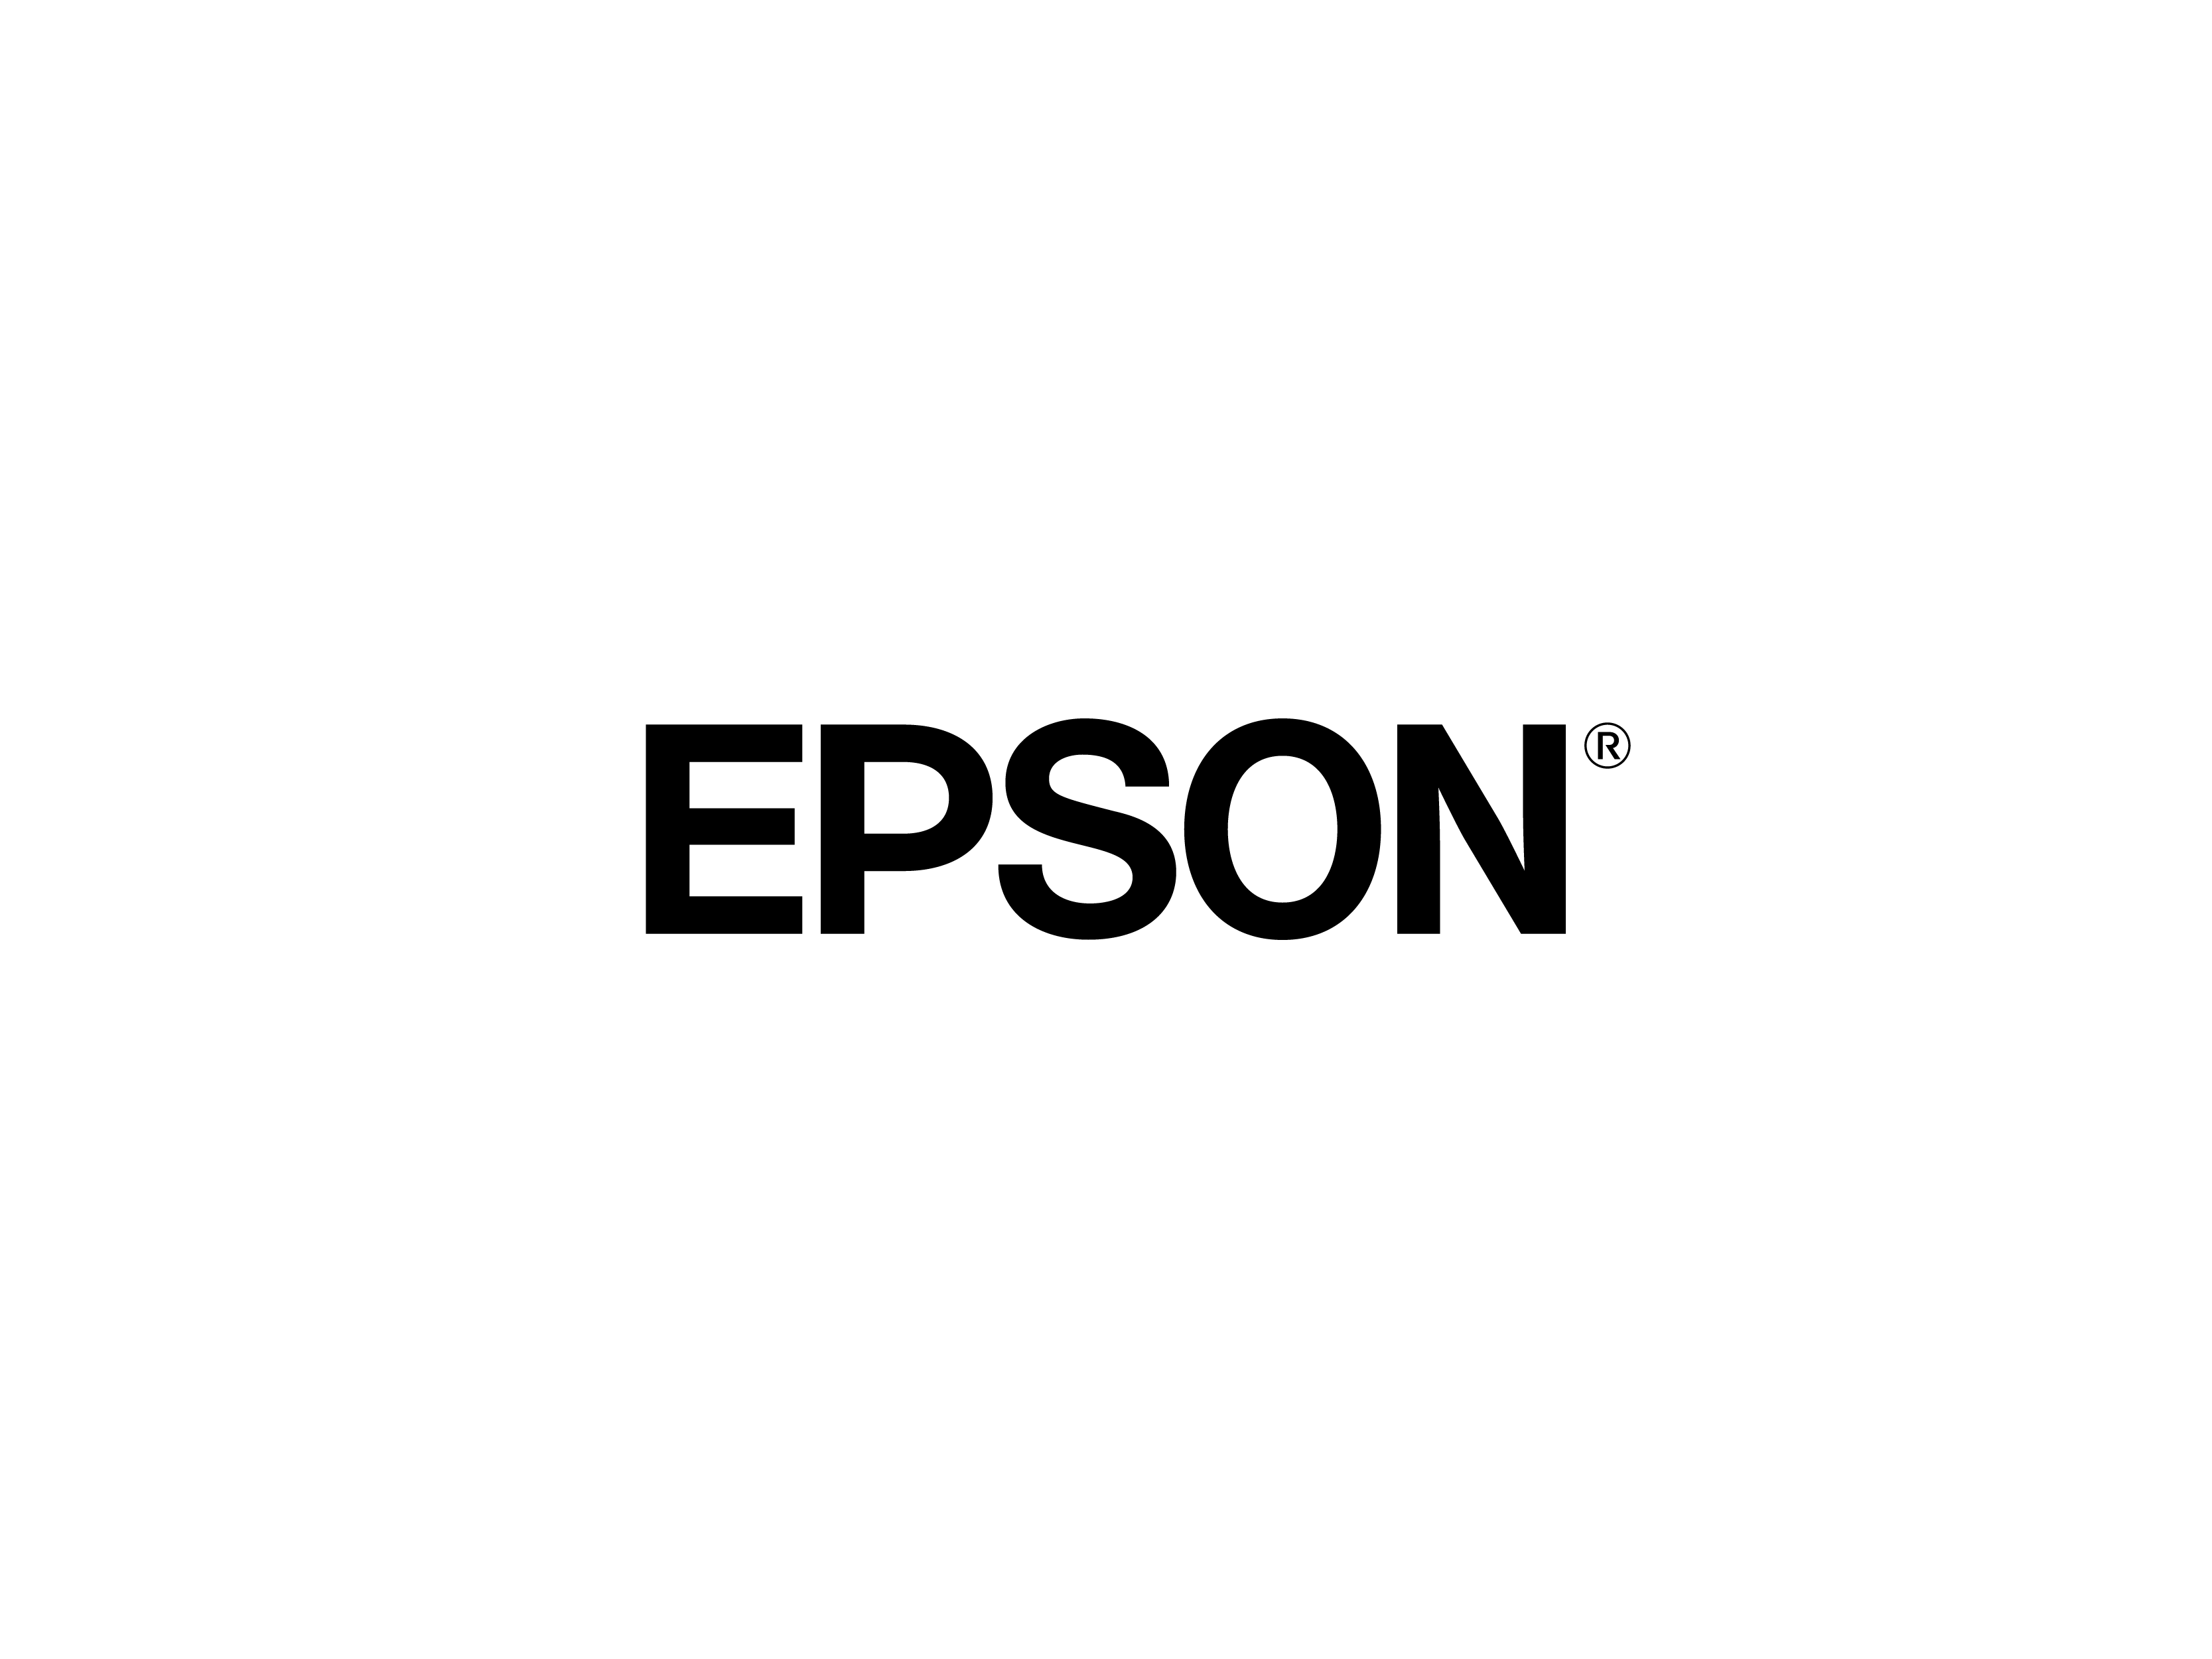 Epson (Arts & Crafts)